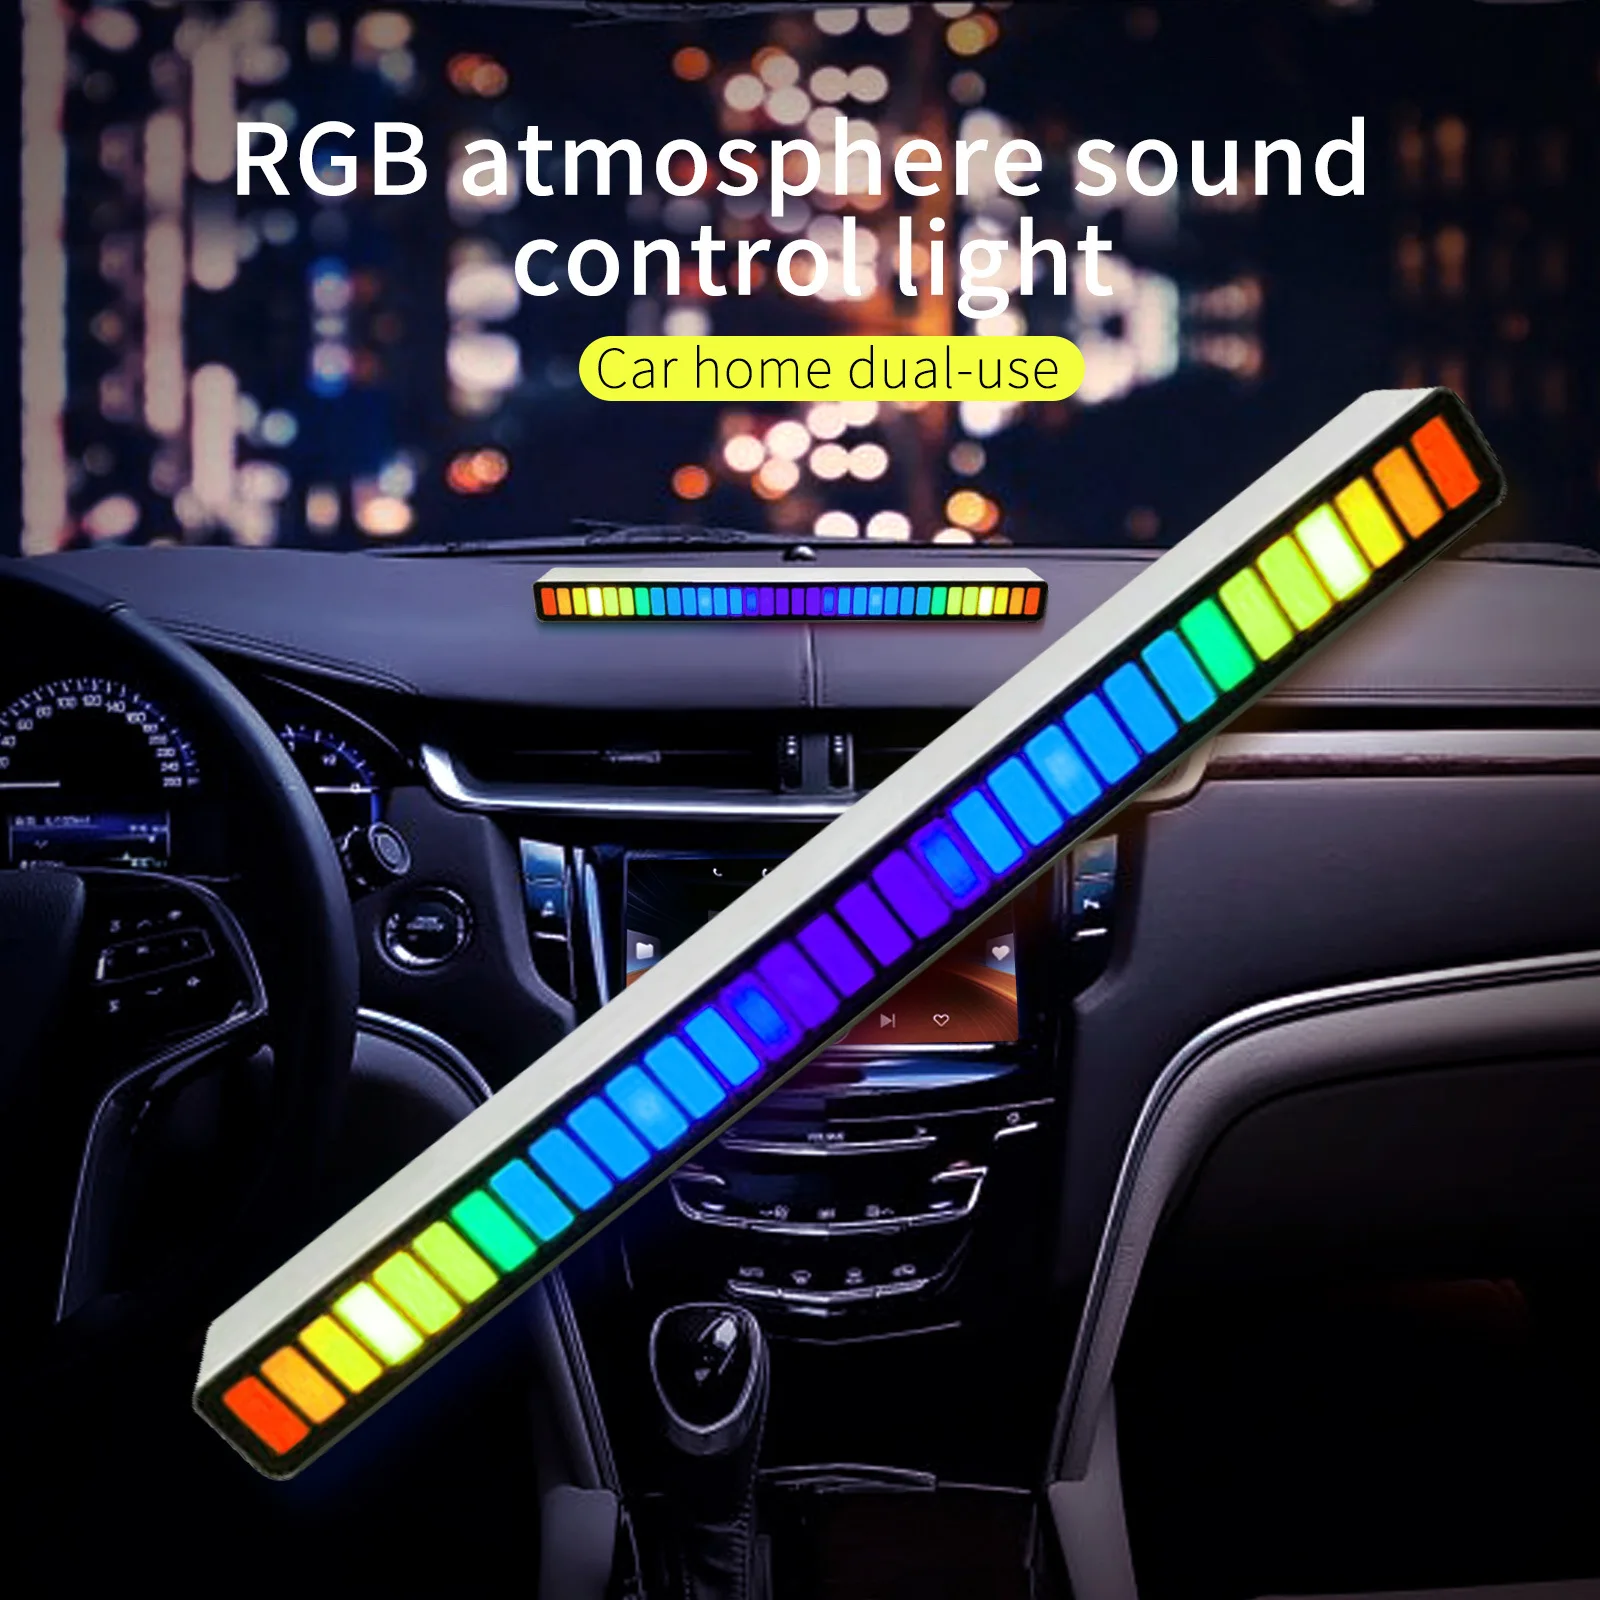 Ltoon pickup atmosphere light car rhythm light car LED atmosphere light phantom color voice control music induction light party